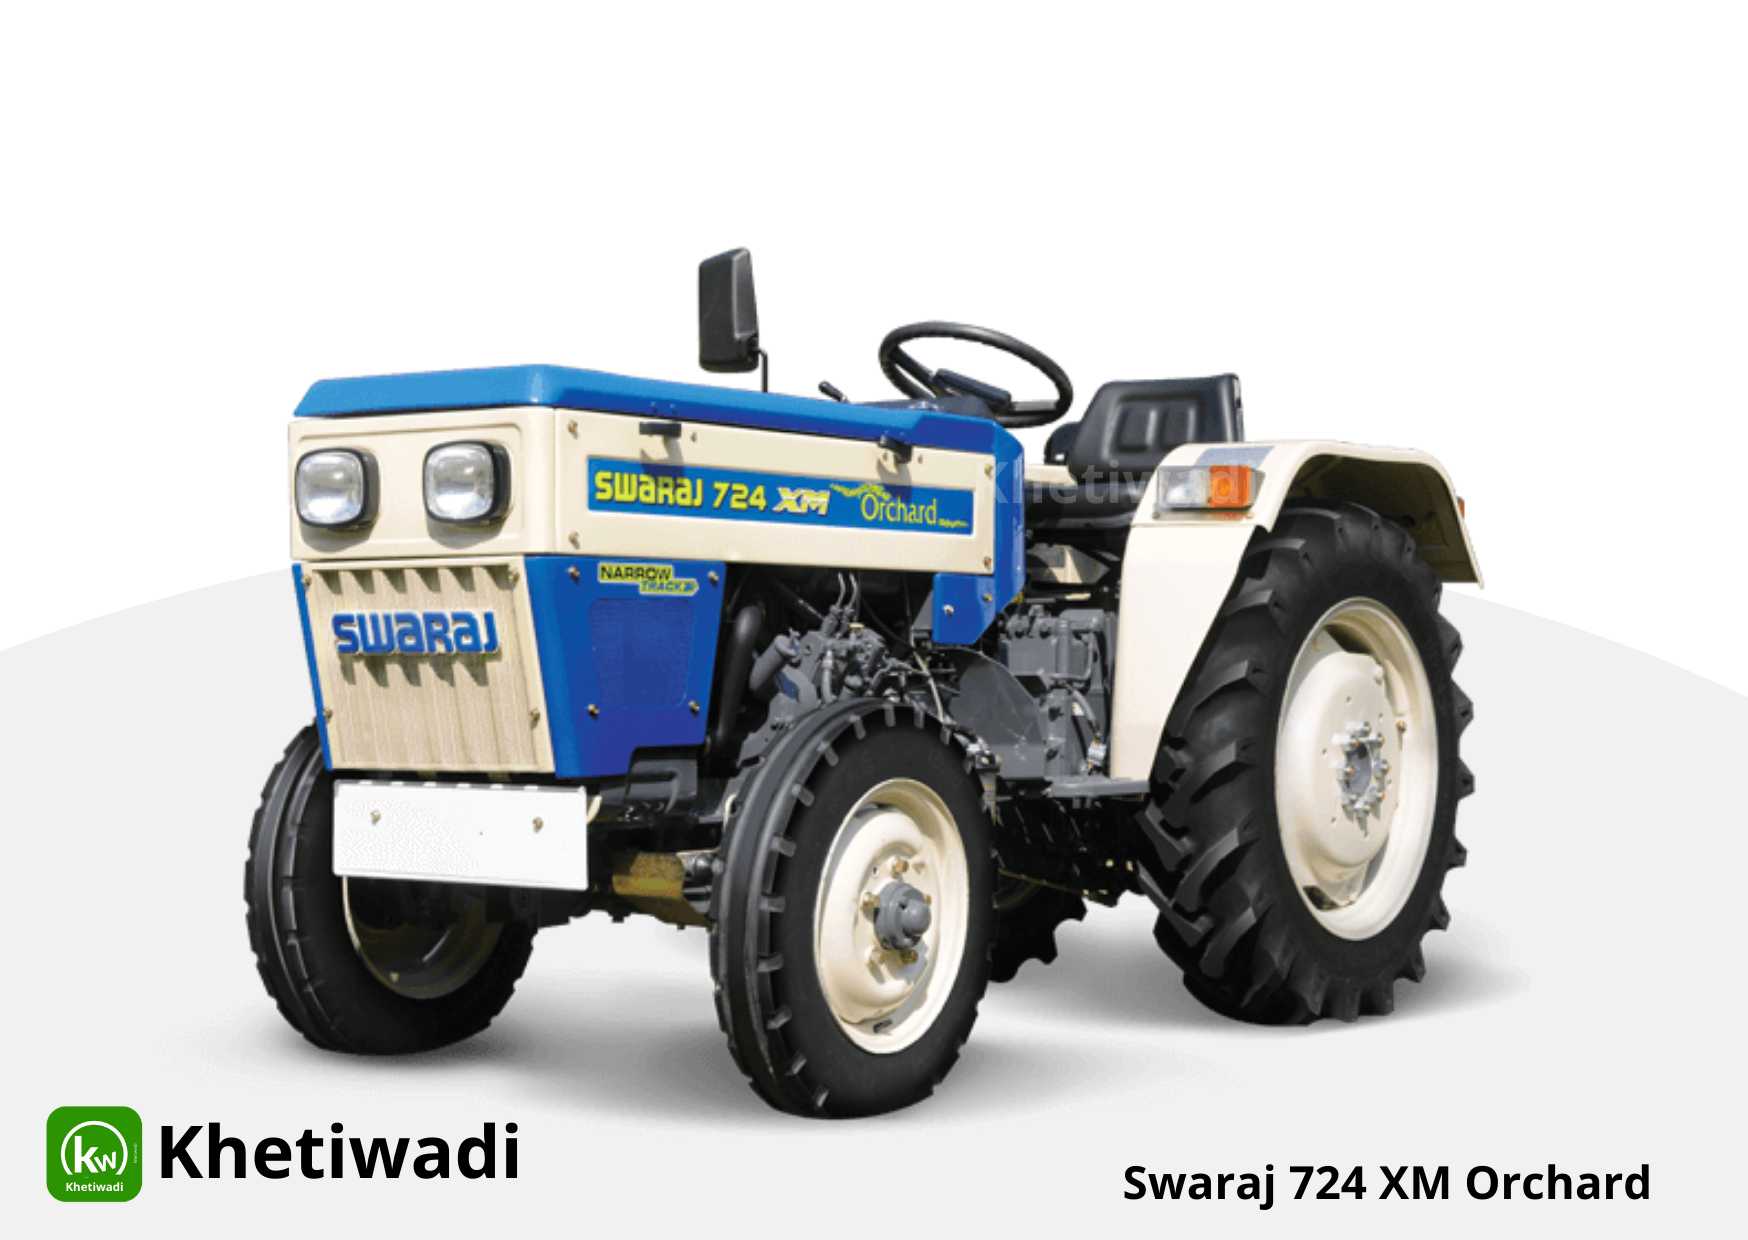 Swaraj 724 XM Orchard image